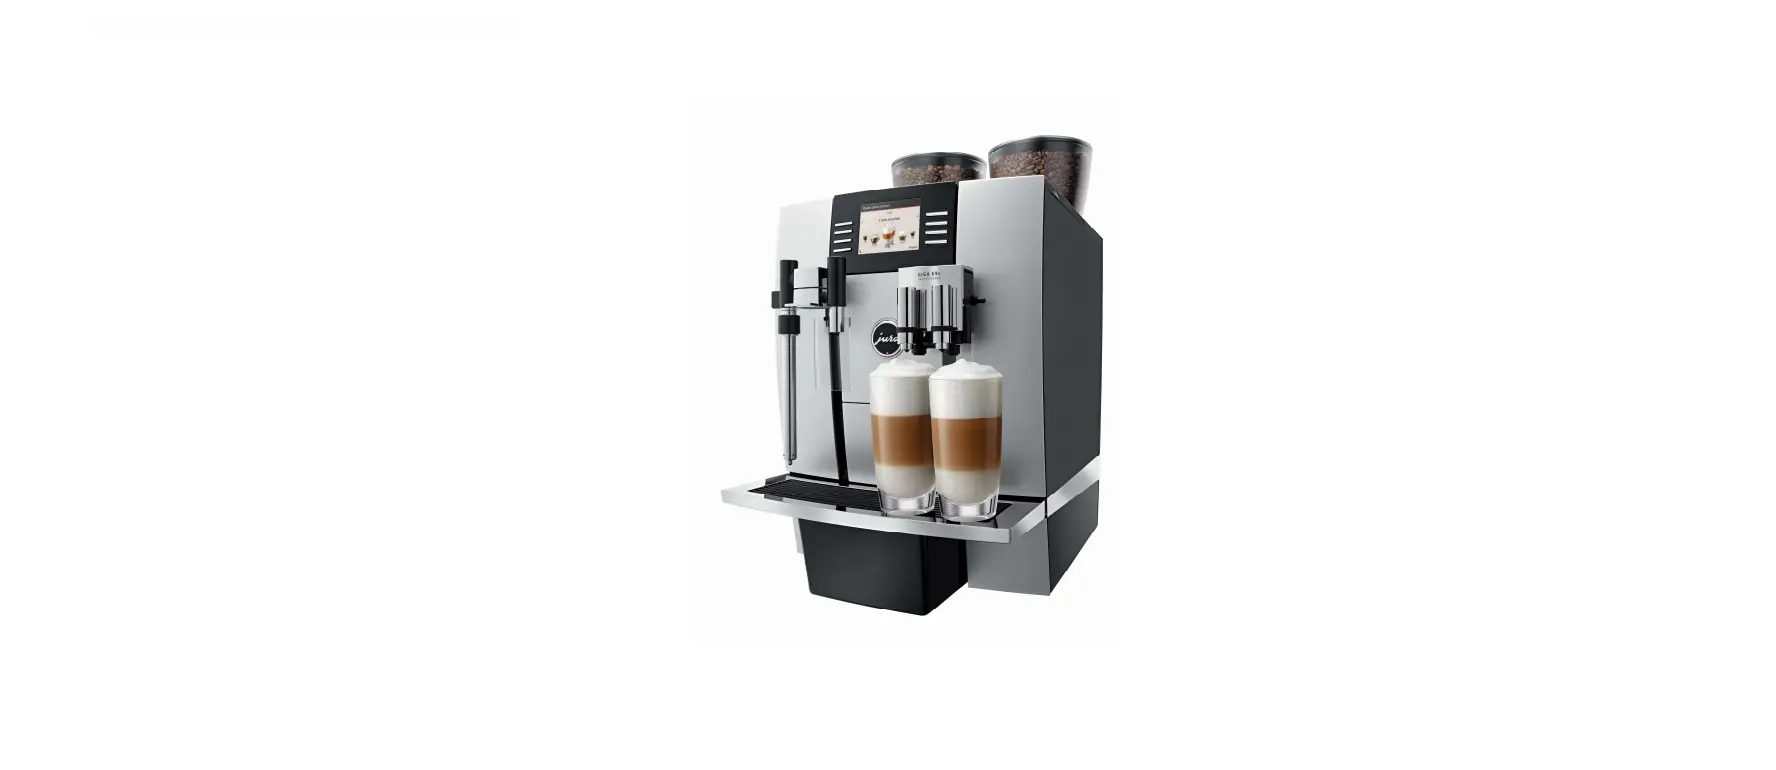 GIGA X9C Professional Coffee Maker Machine